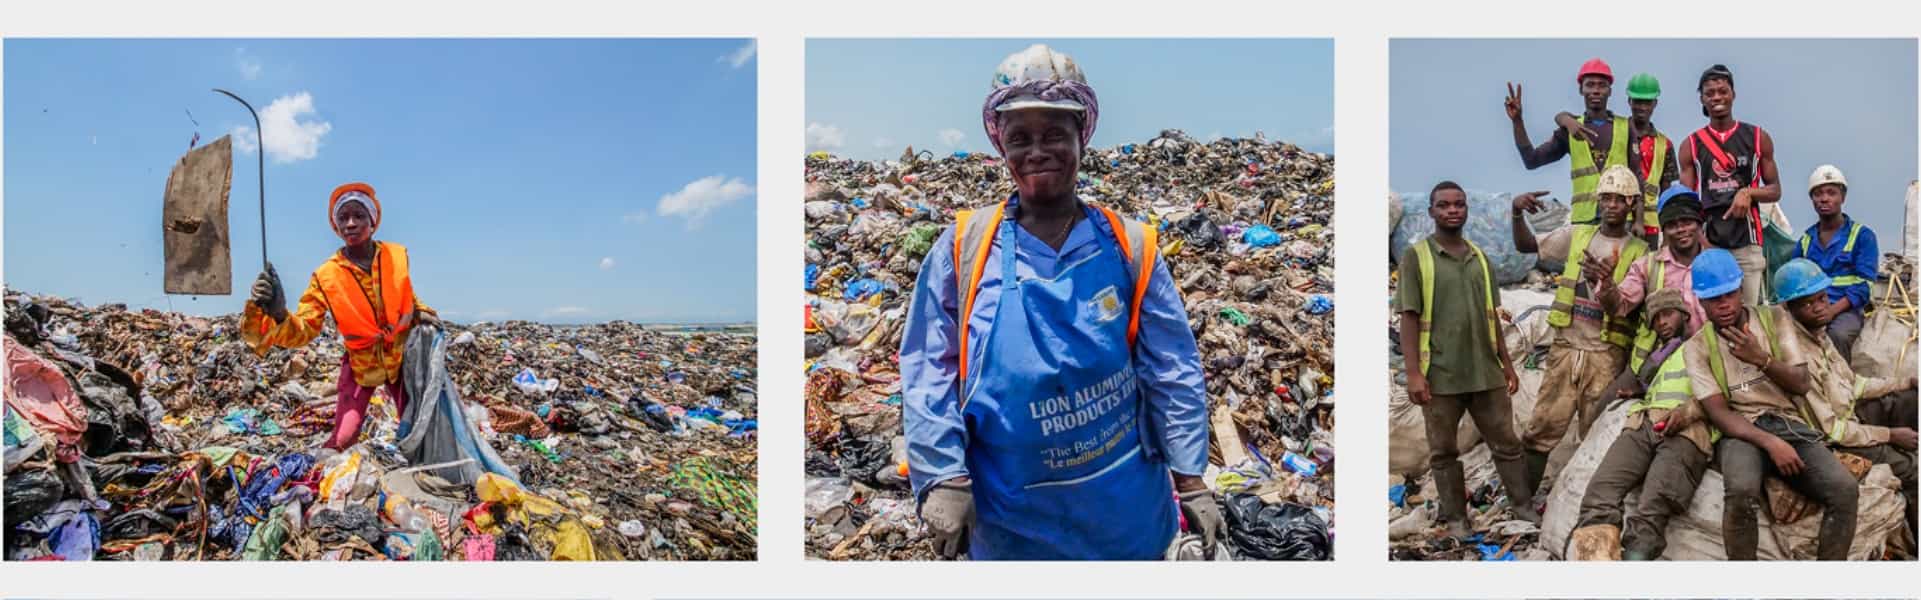 Accra Waste pickers - Dean Saffron